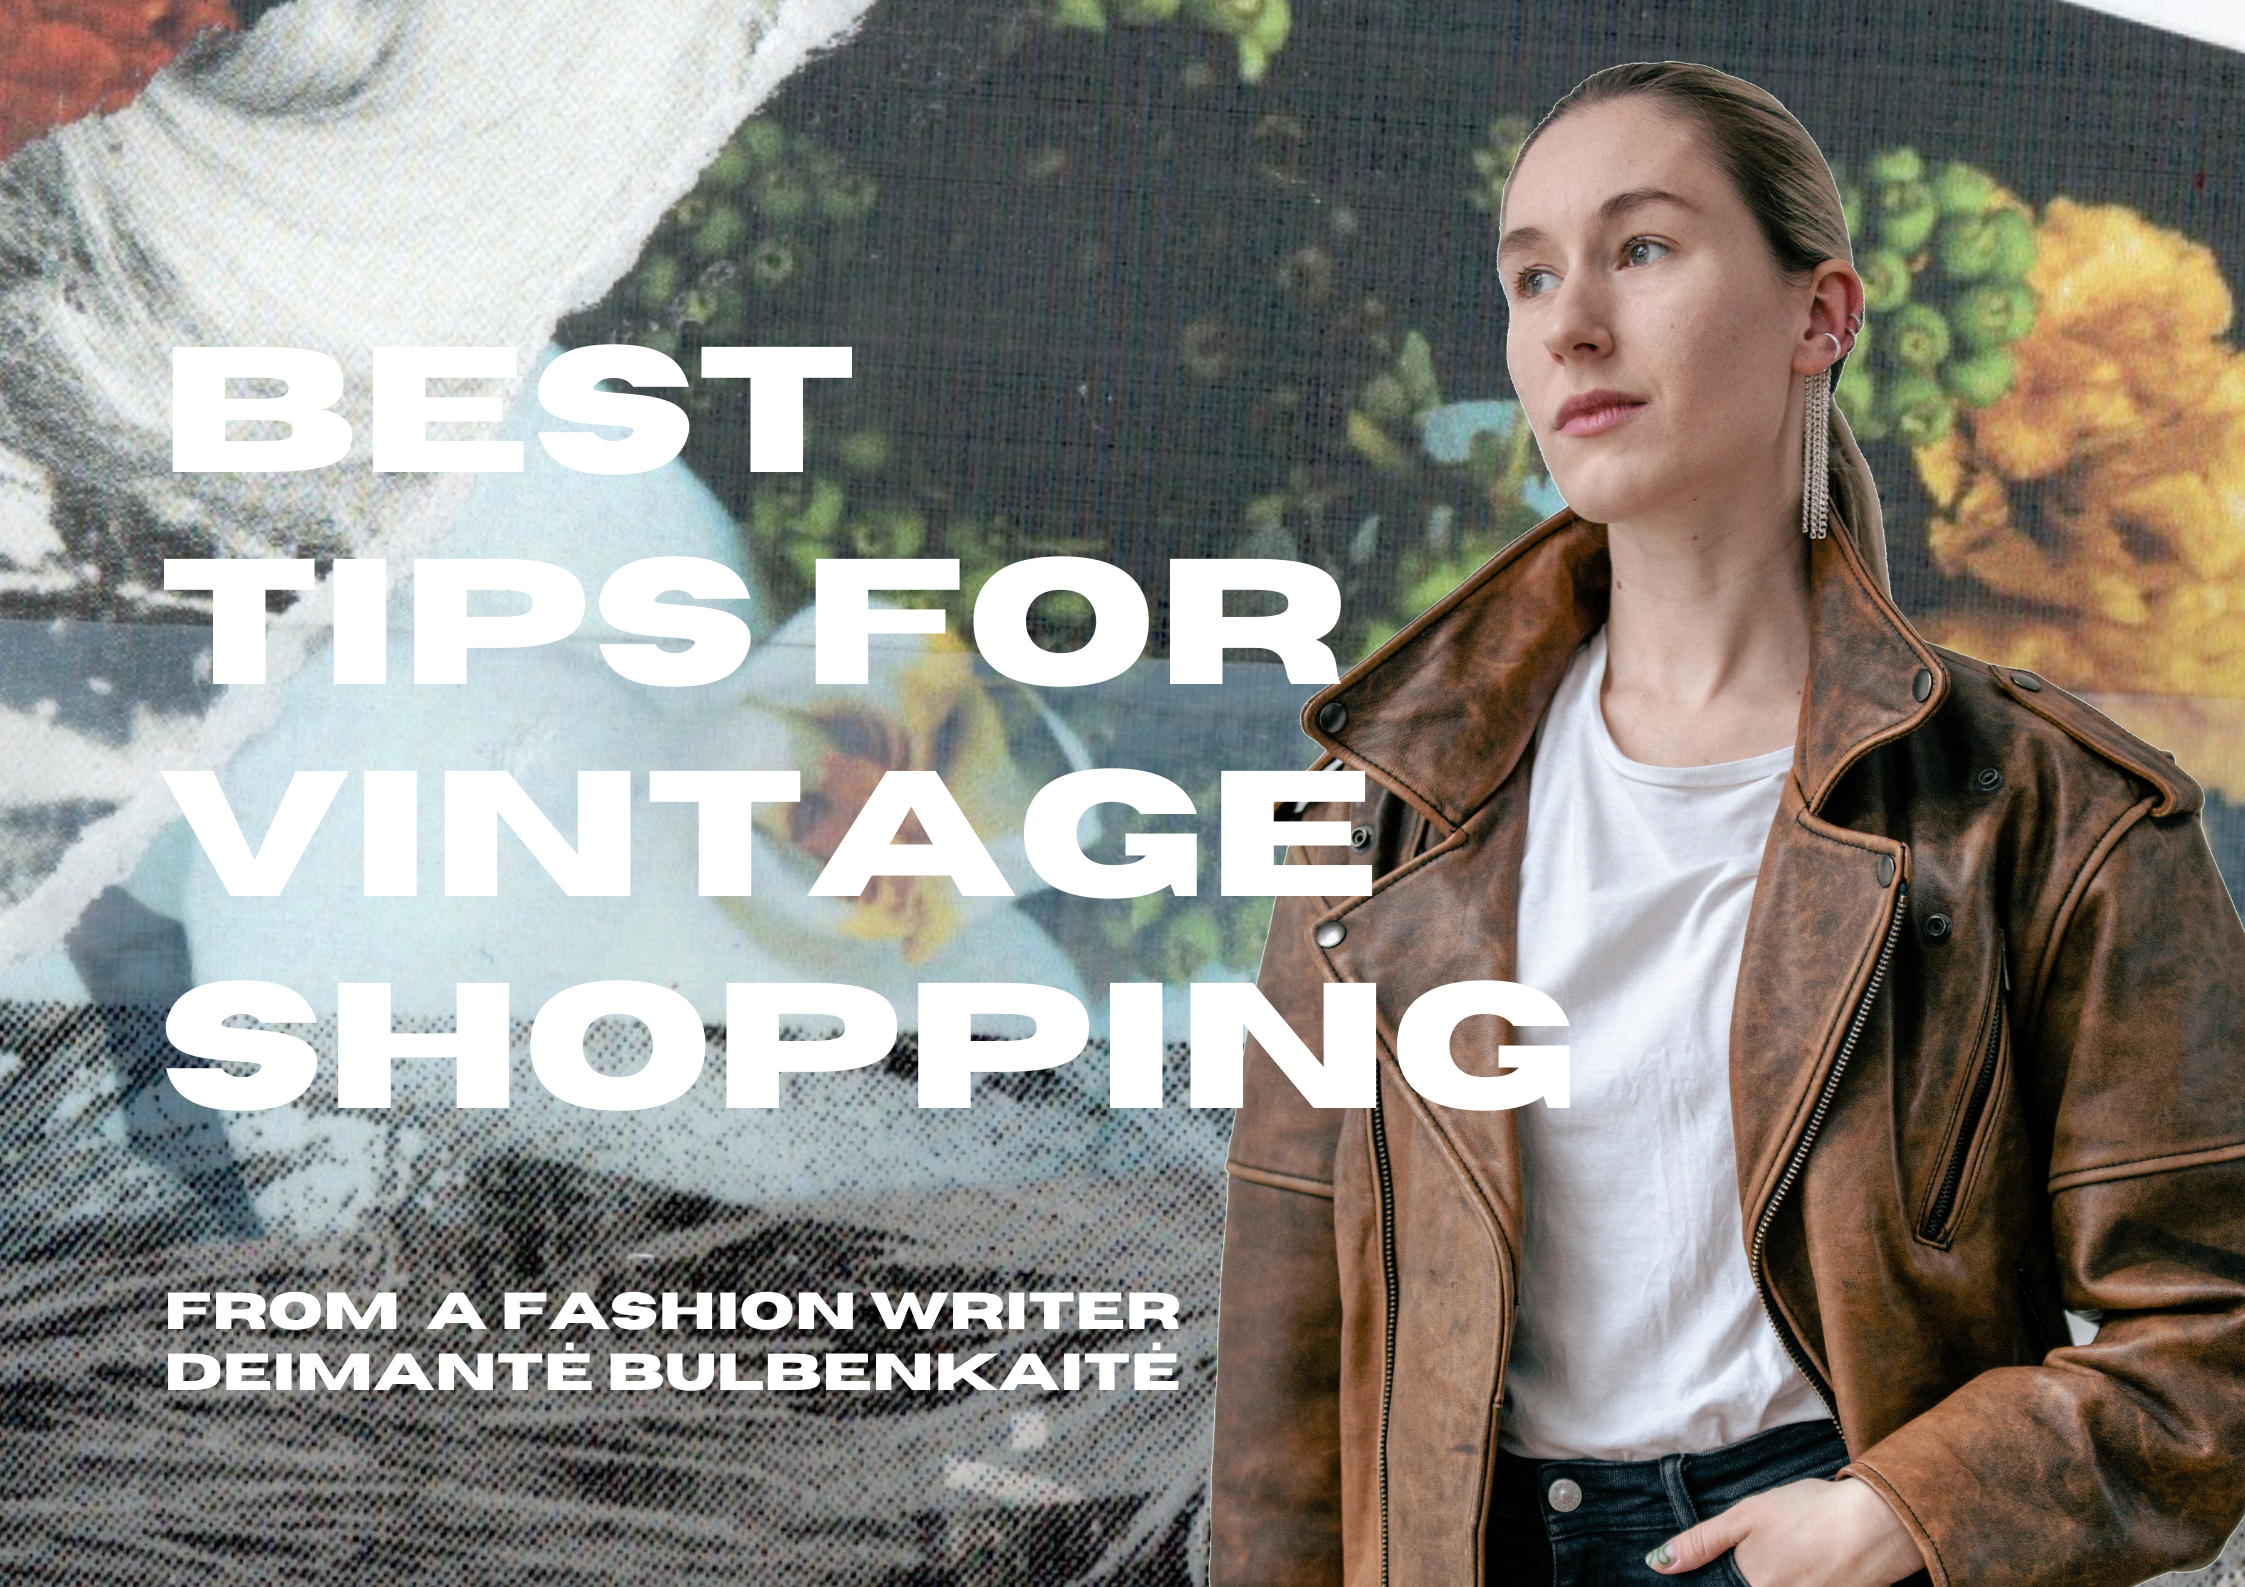 Best tips for vintage shopping from a fashion writer Deimantė Bulbenkaitė